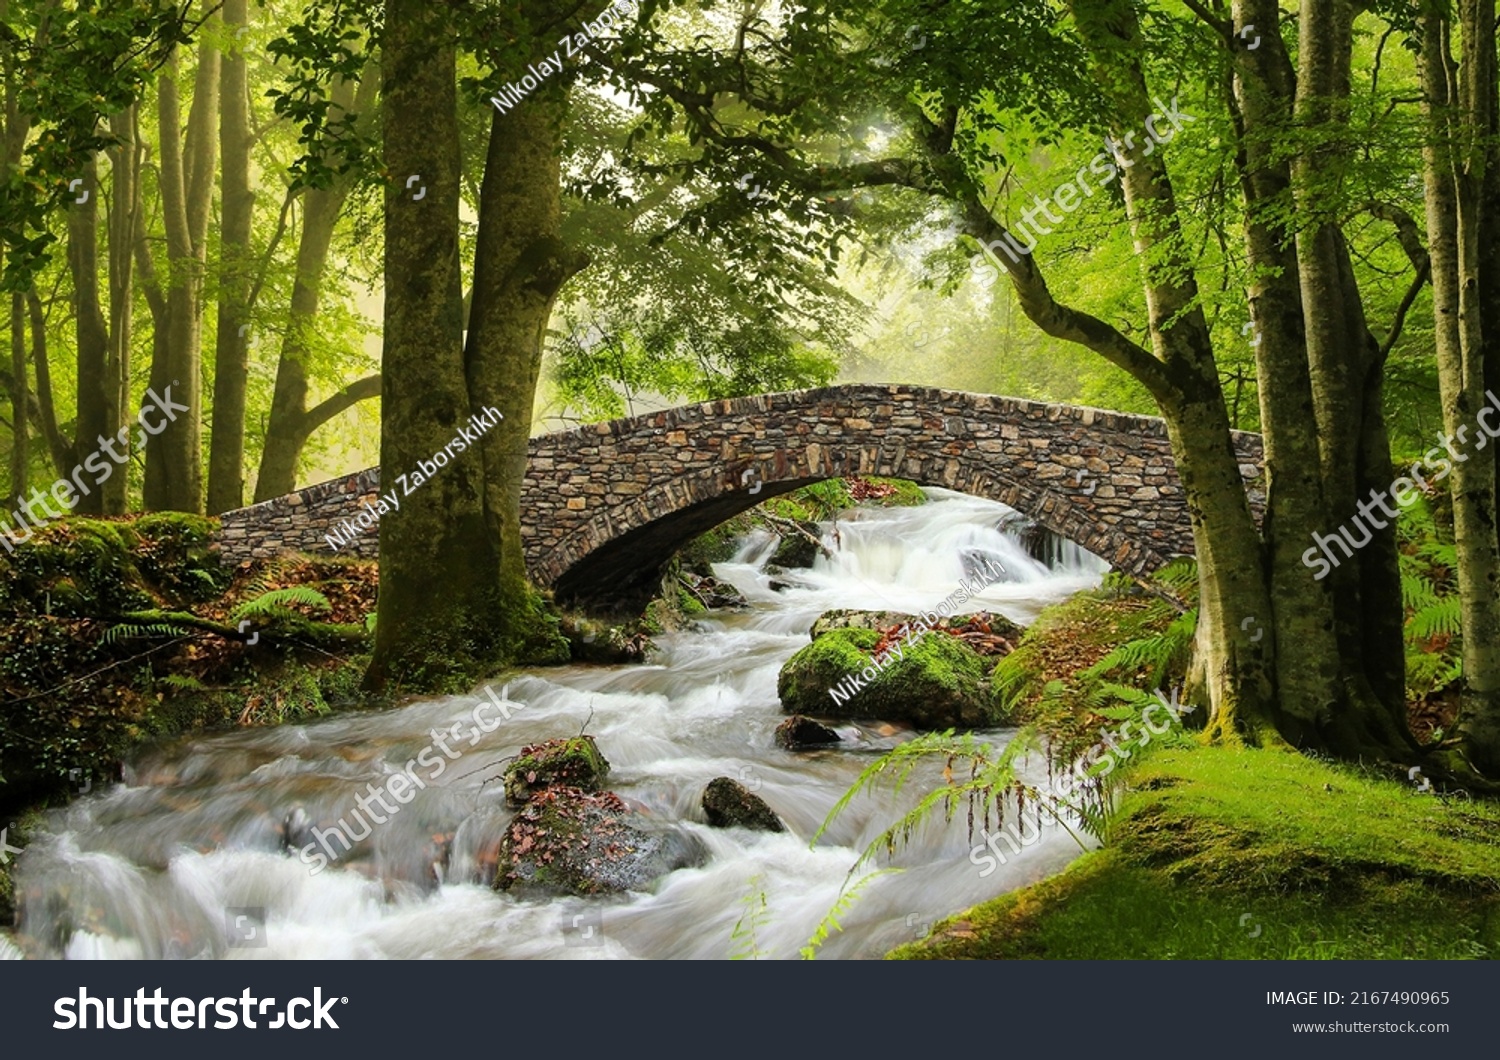 Stone bridge over a stormy stream in the forest. Forest stream bridge. Bridge over forest stream. Forest stream flowinf under stone bridge #2167490965